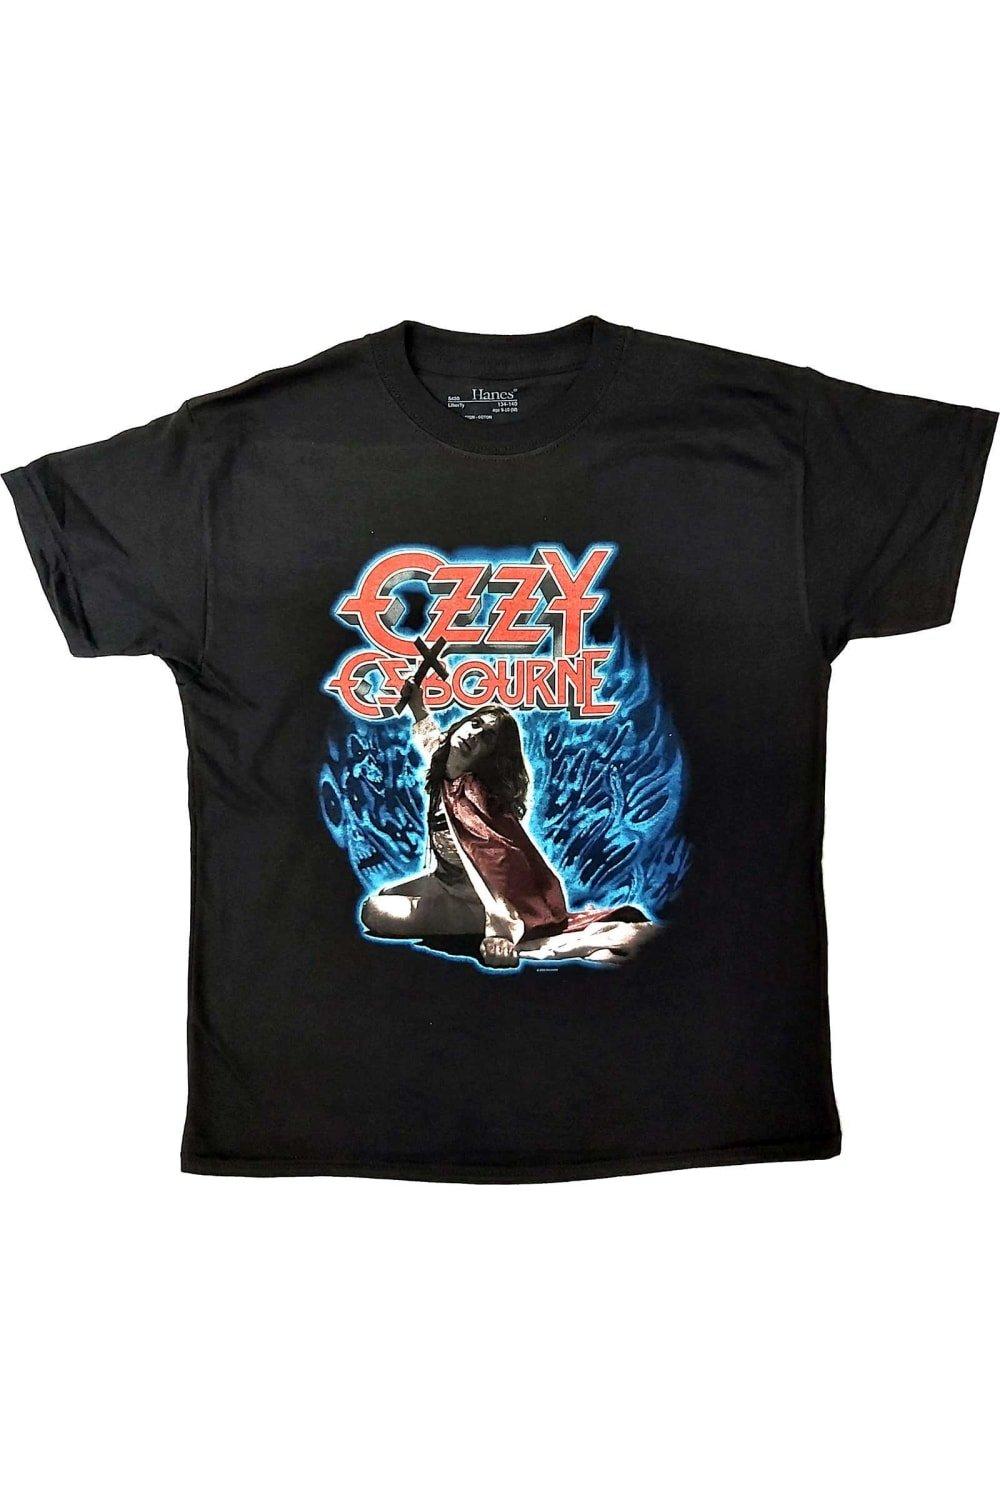 Хлопковая футболка Blizzard Of Ozz Ozzy Osbourne, черный ozzy osbourne ozzy osbourne blizzard of ozz colour